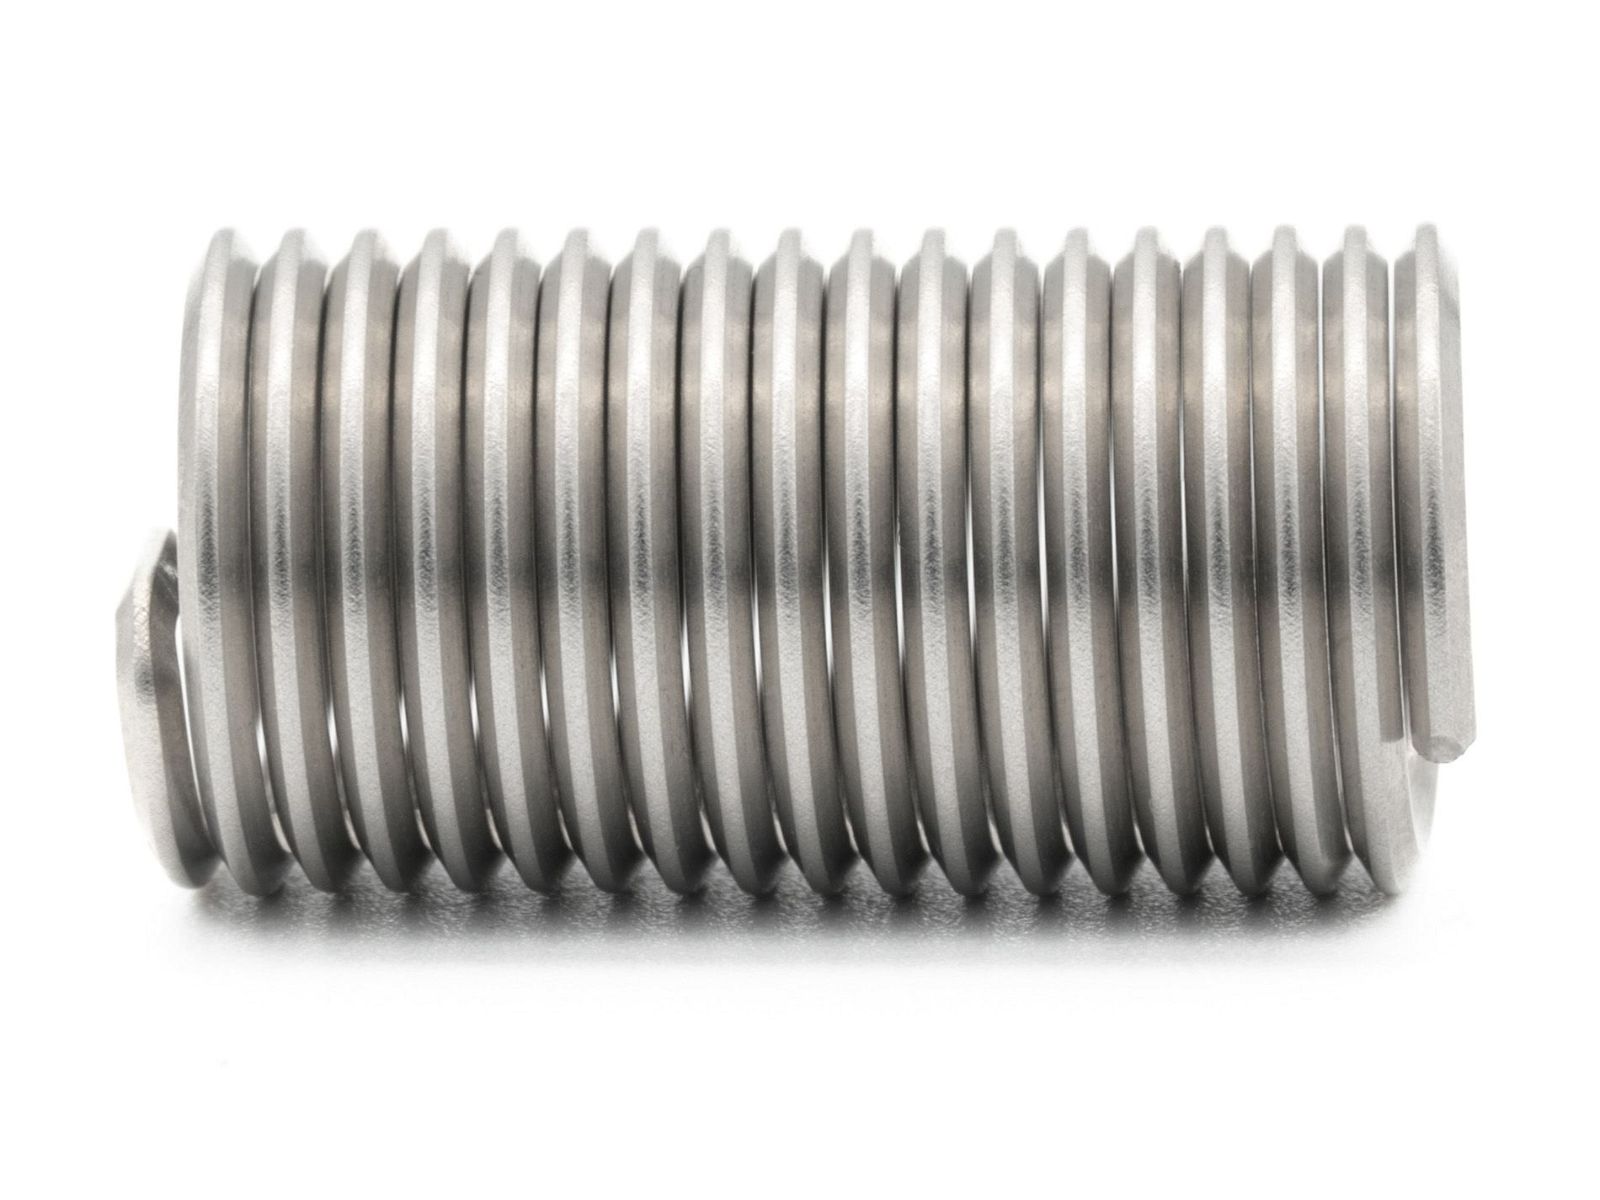 BaerCoil Wire Thread Inserts BSW 1“ x 8 - 3.0 D (76.2 mm) - free running - 10 pcs.